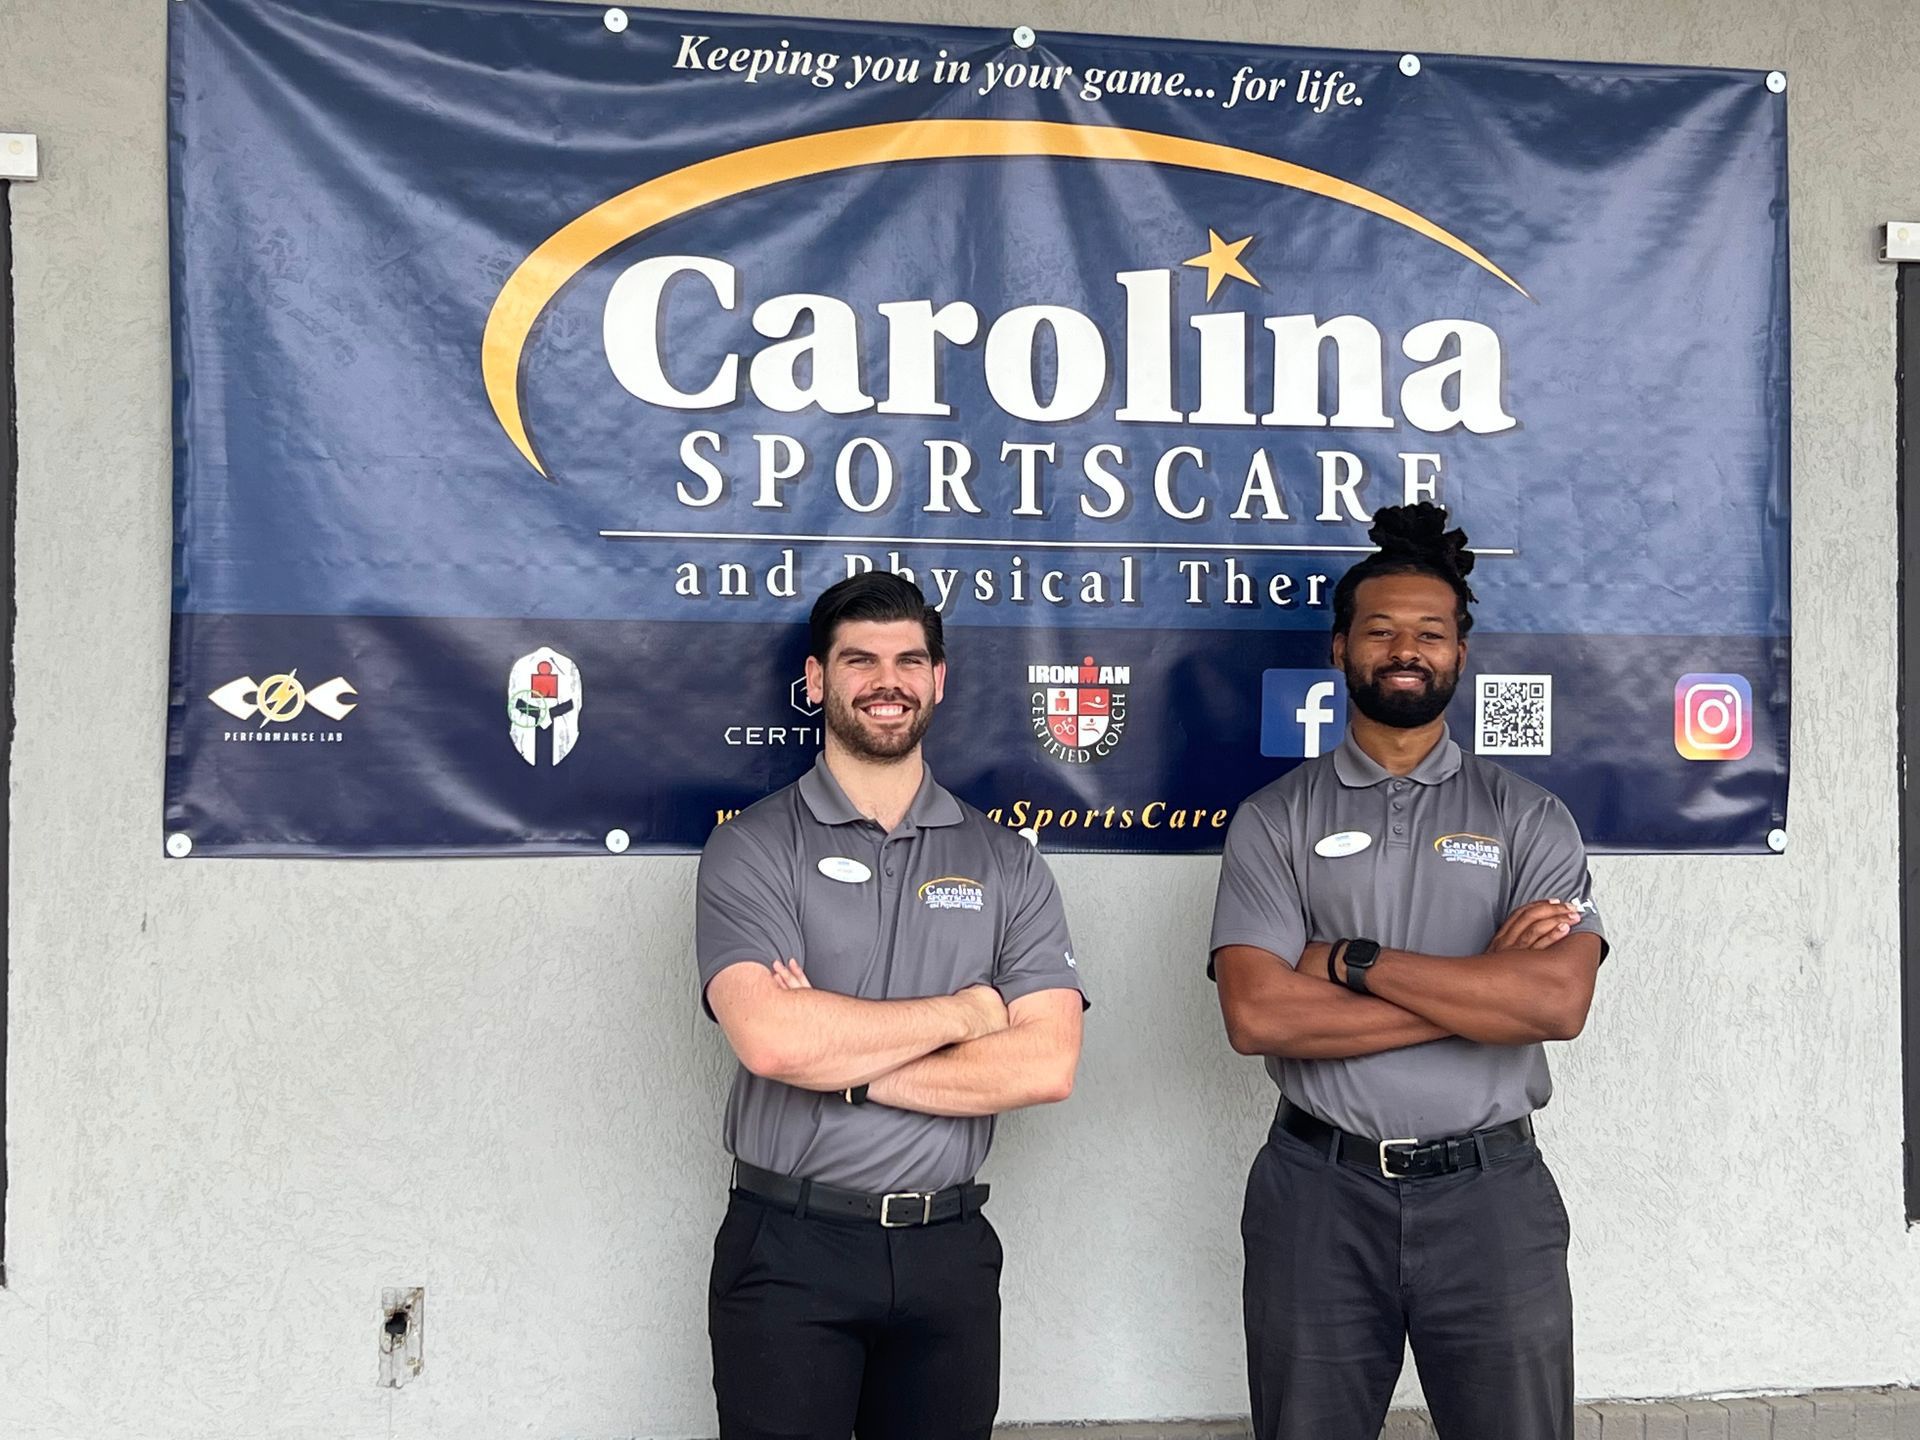 personal trainers of carolina sportscare